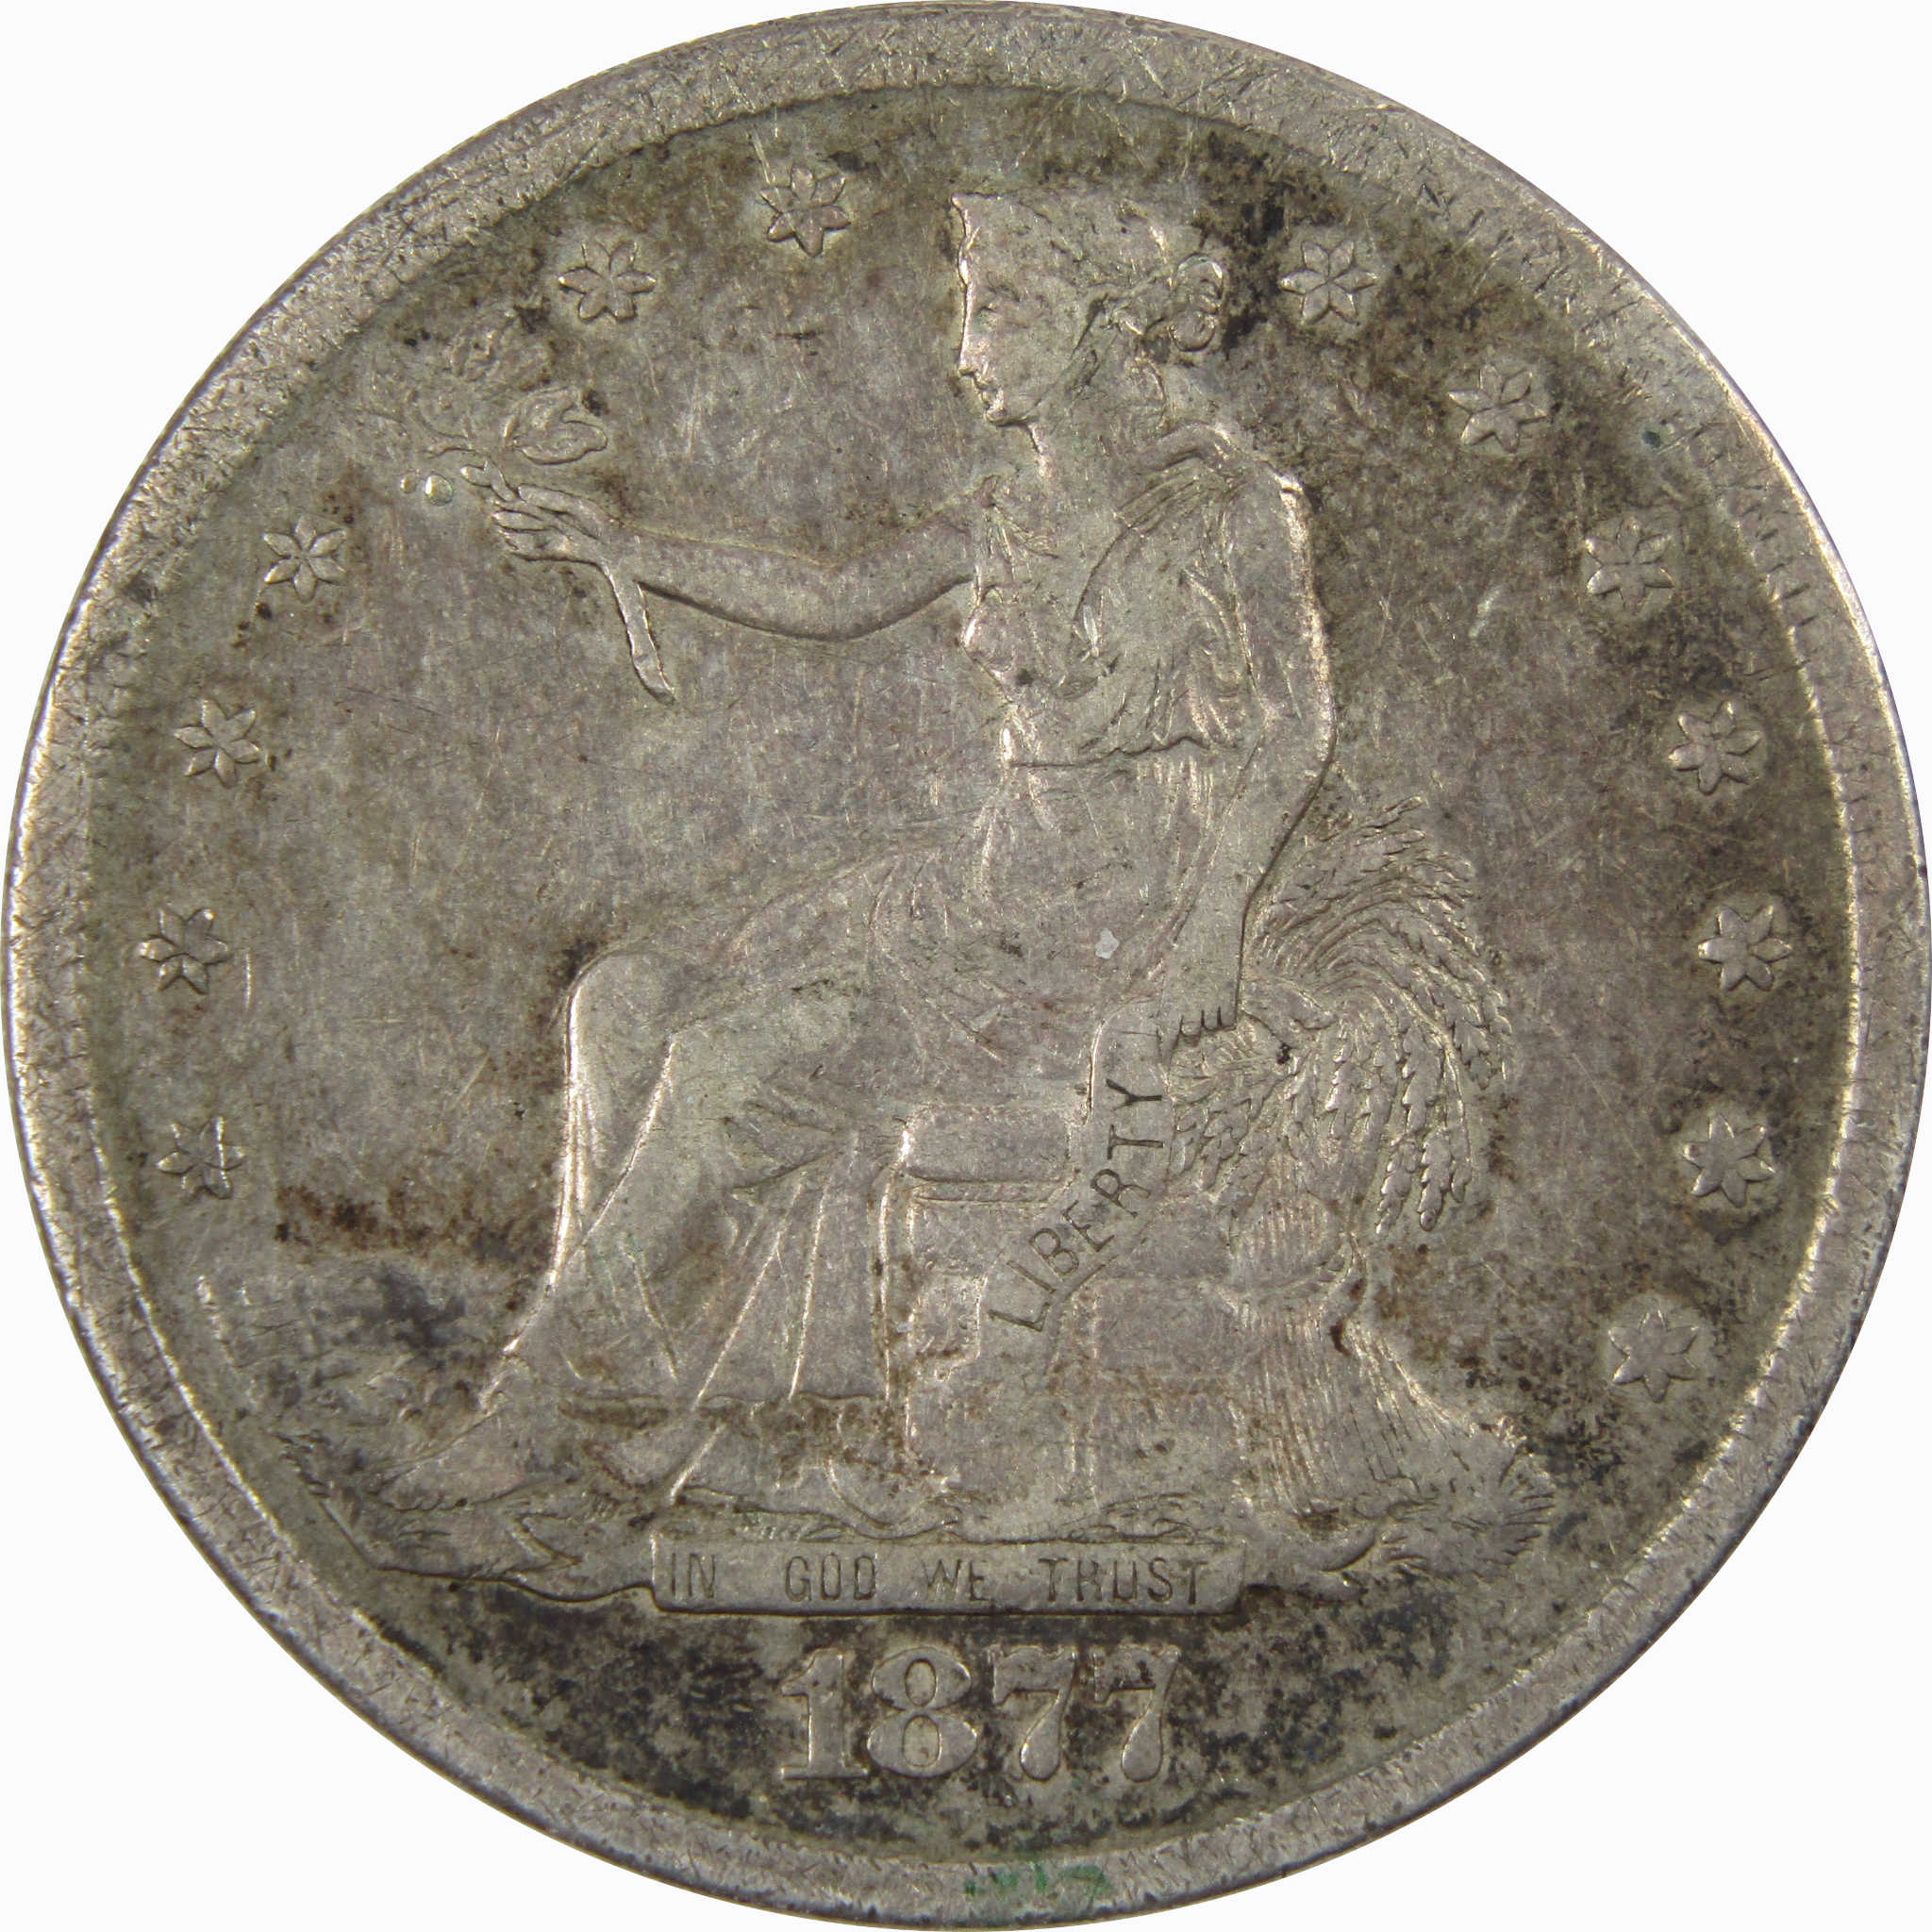 1877 Trade Dollar VF Very Fine Details 90% Silver $1 Coin SKU:I4353